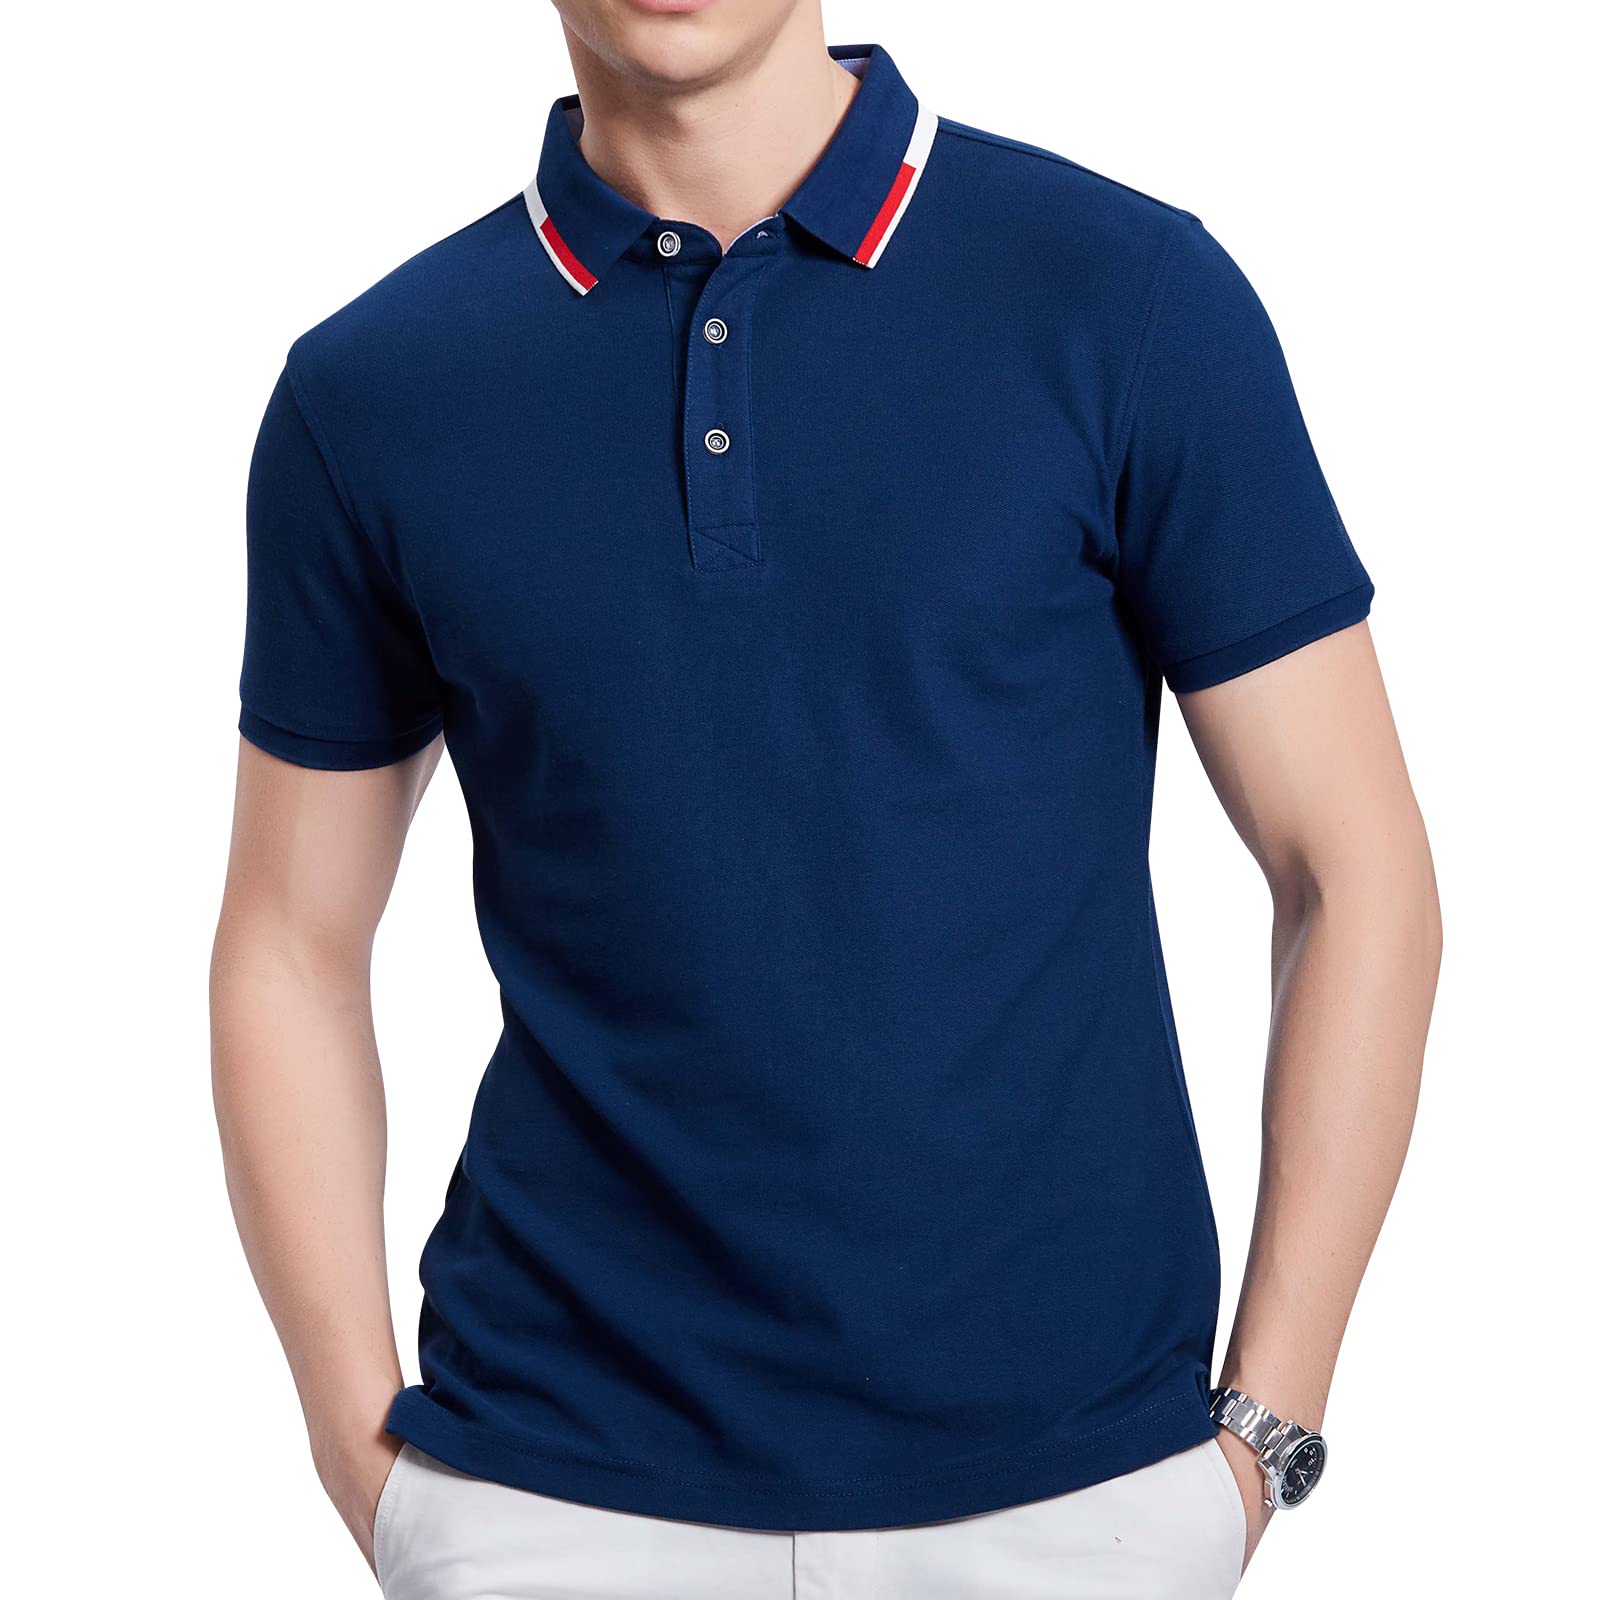 ZWGOOO Mens Advantage Performance Short Sleeve Solid Polo Shirts Casual Cla - 2